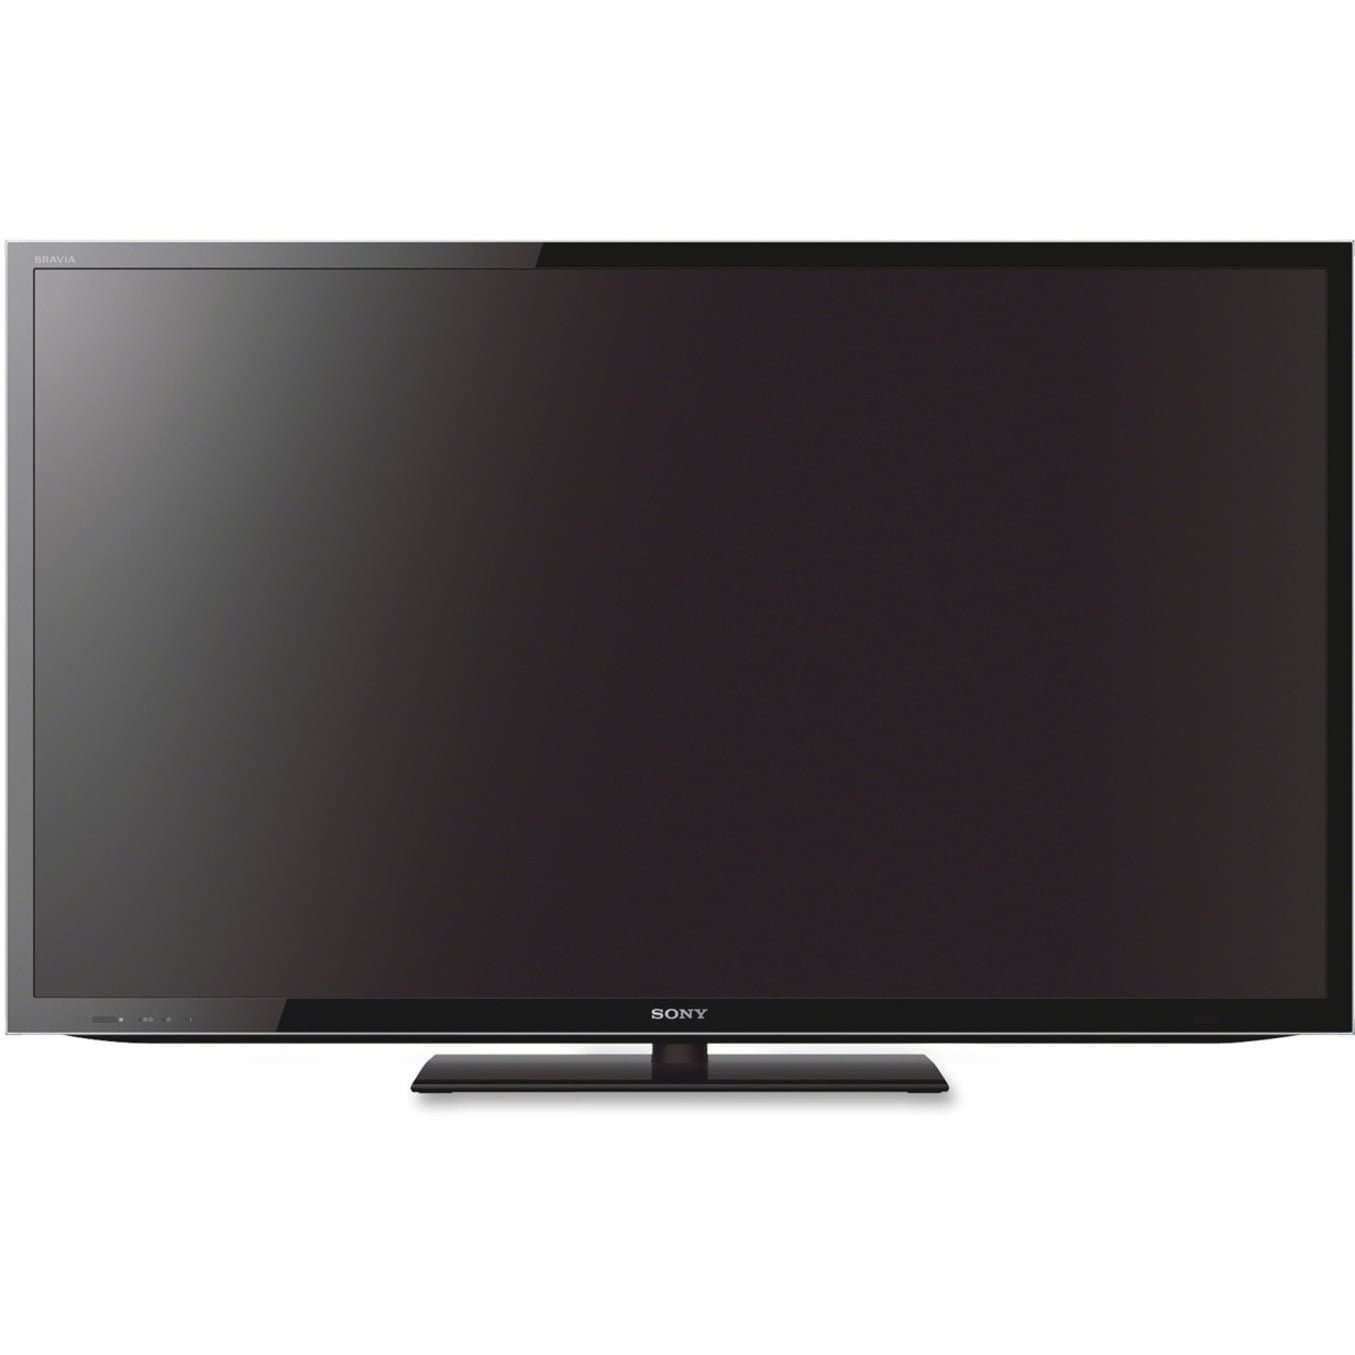 Sony 55 Class HDTV (1080p) LED-LCD TV (KDL-55HX750)